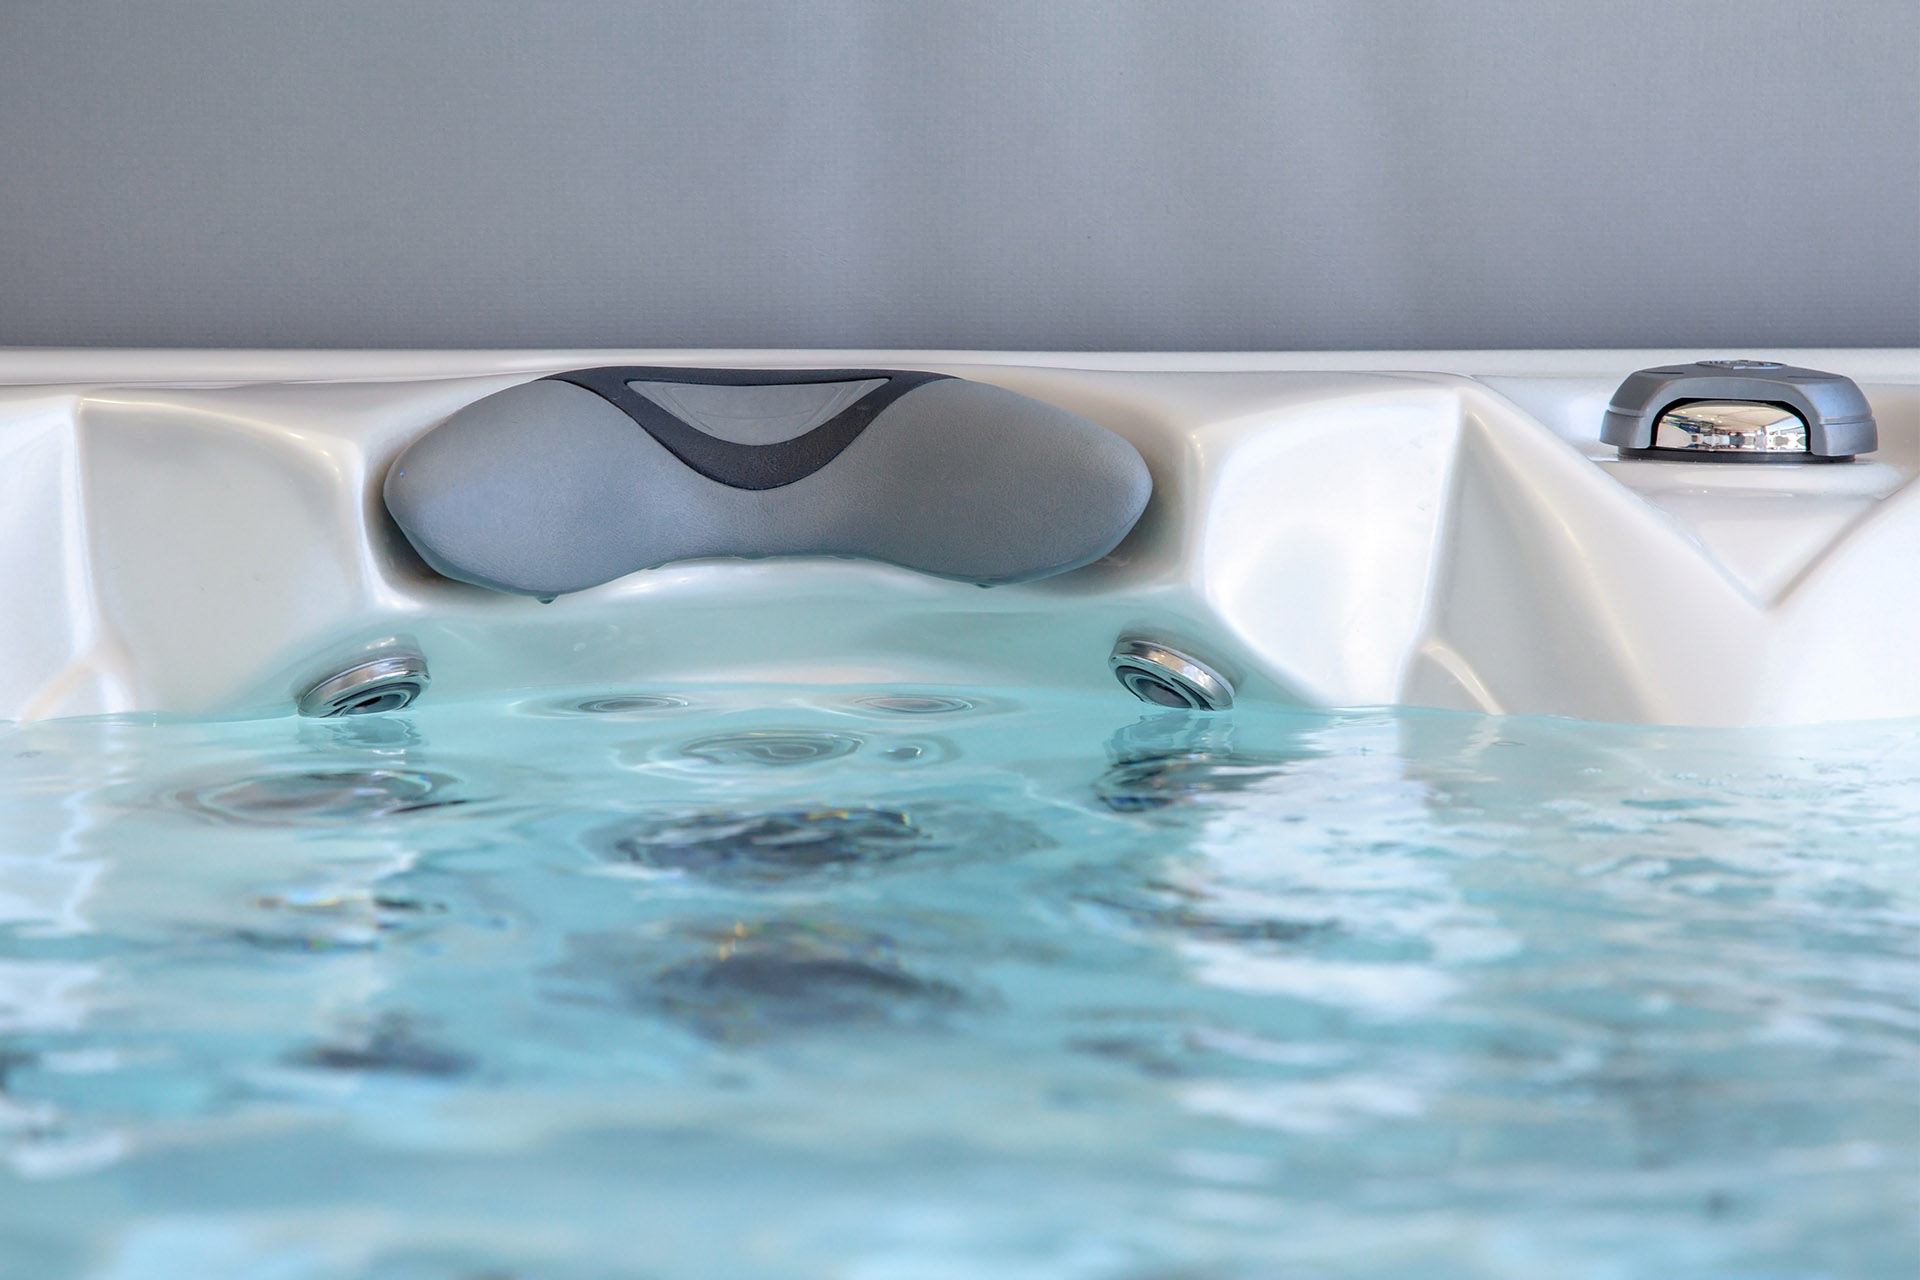 Walk-in tub water jets